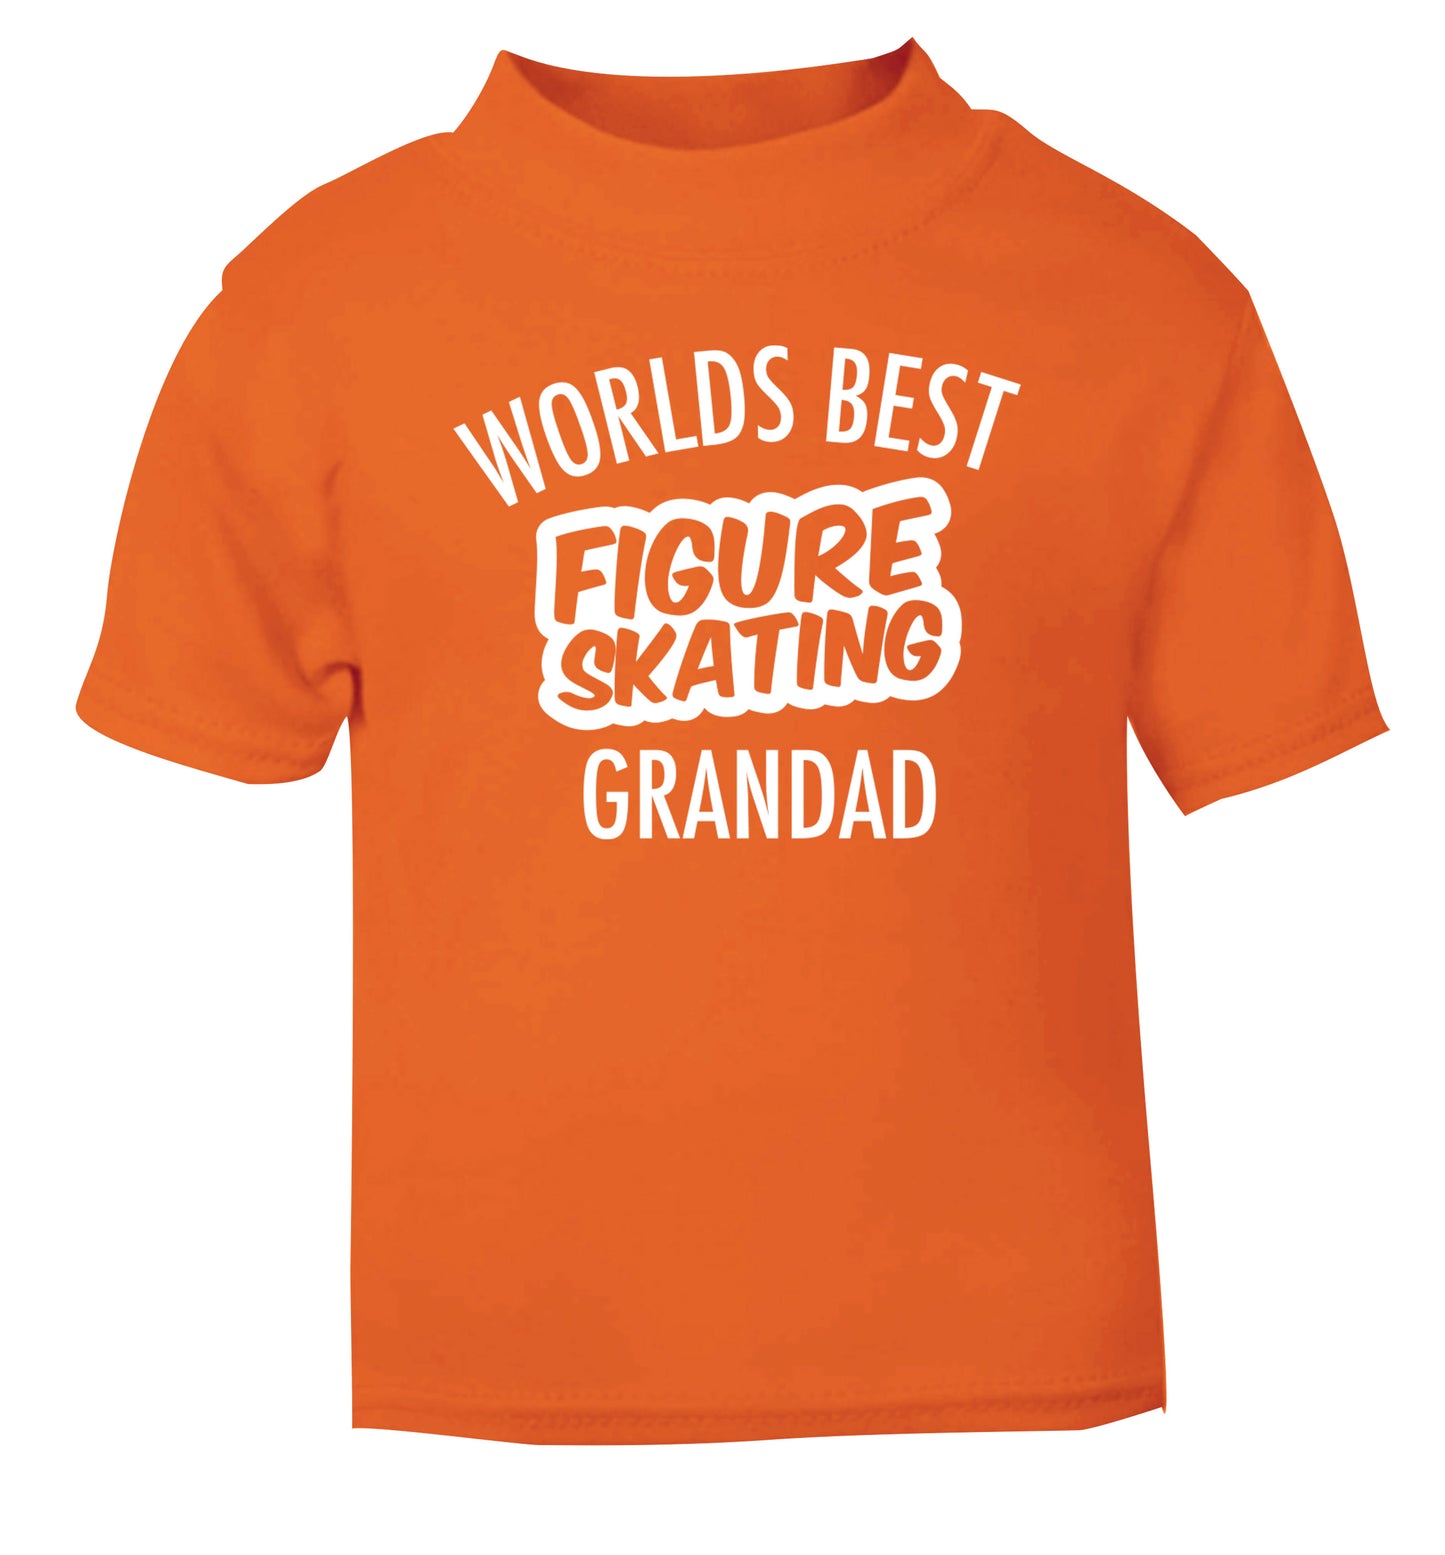 Worlds best figure skating grandad orange Baby Toddler Tshirt 2 Years